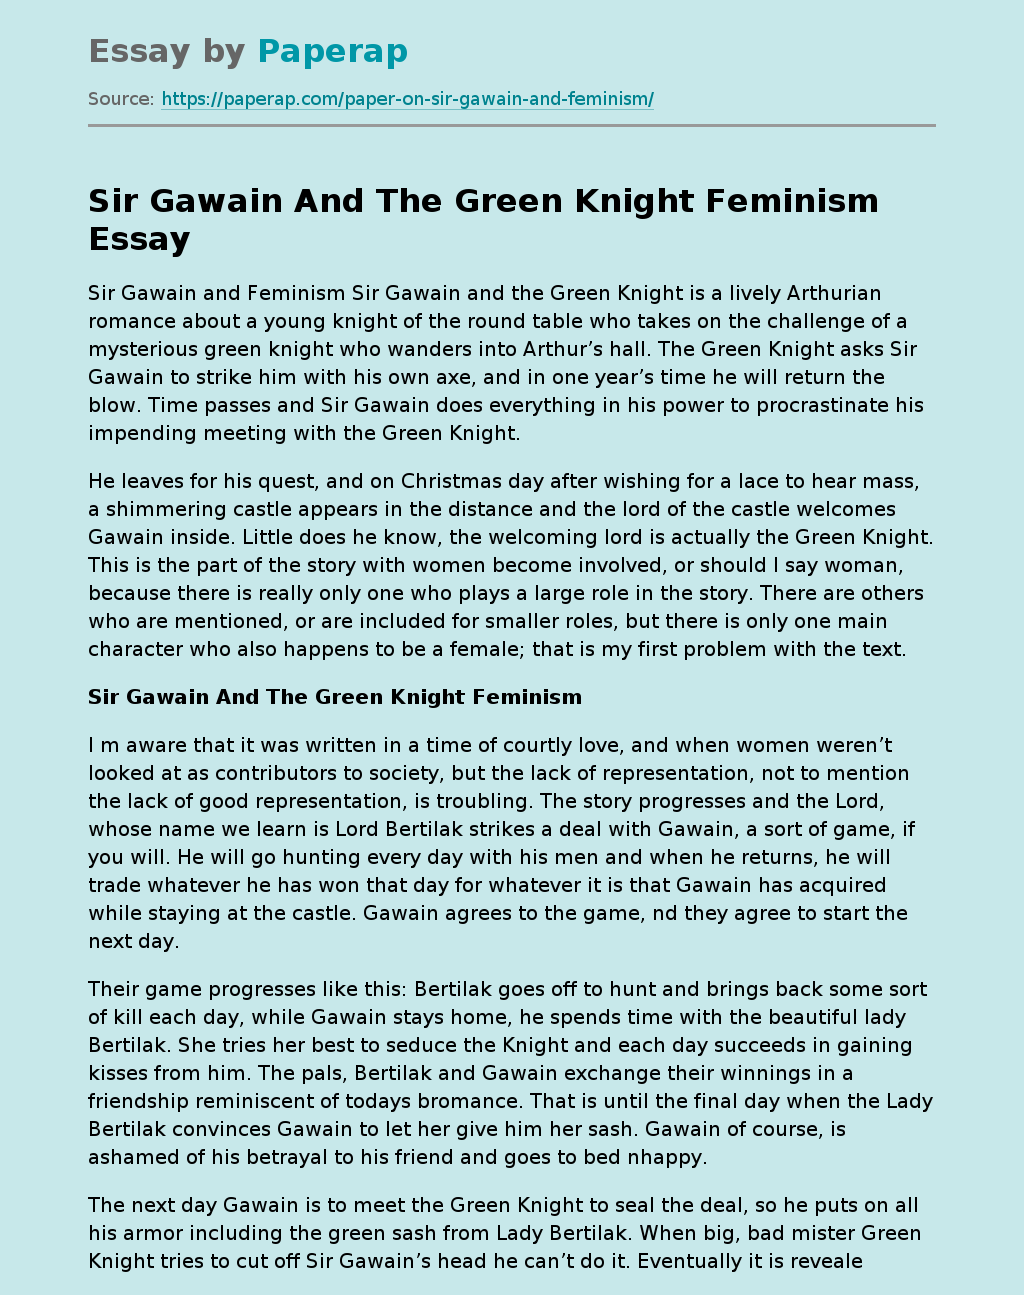 Sir Gawain And The Green Knight Feminism